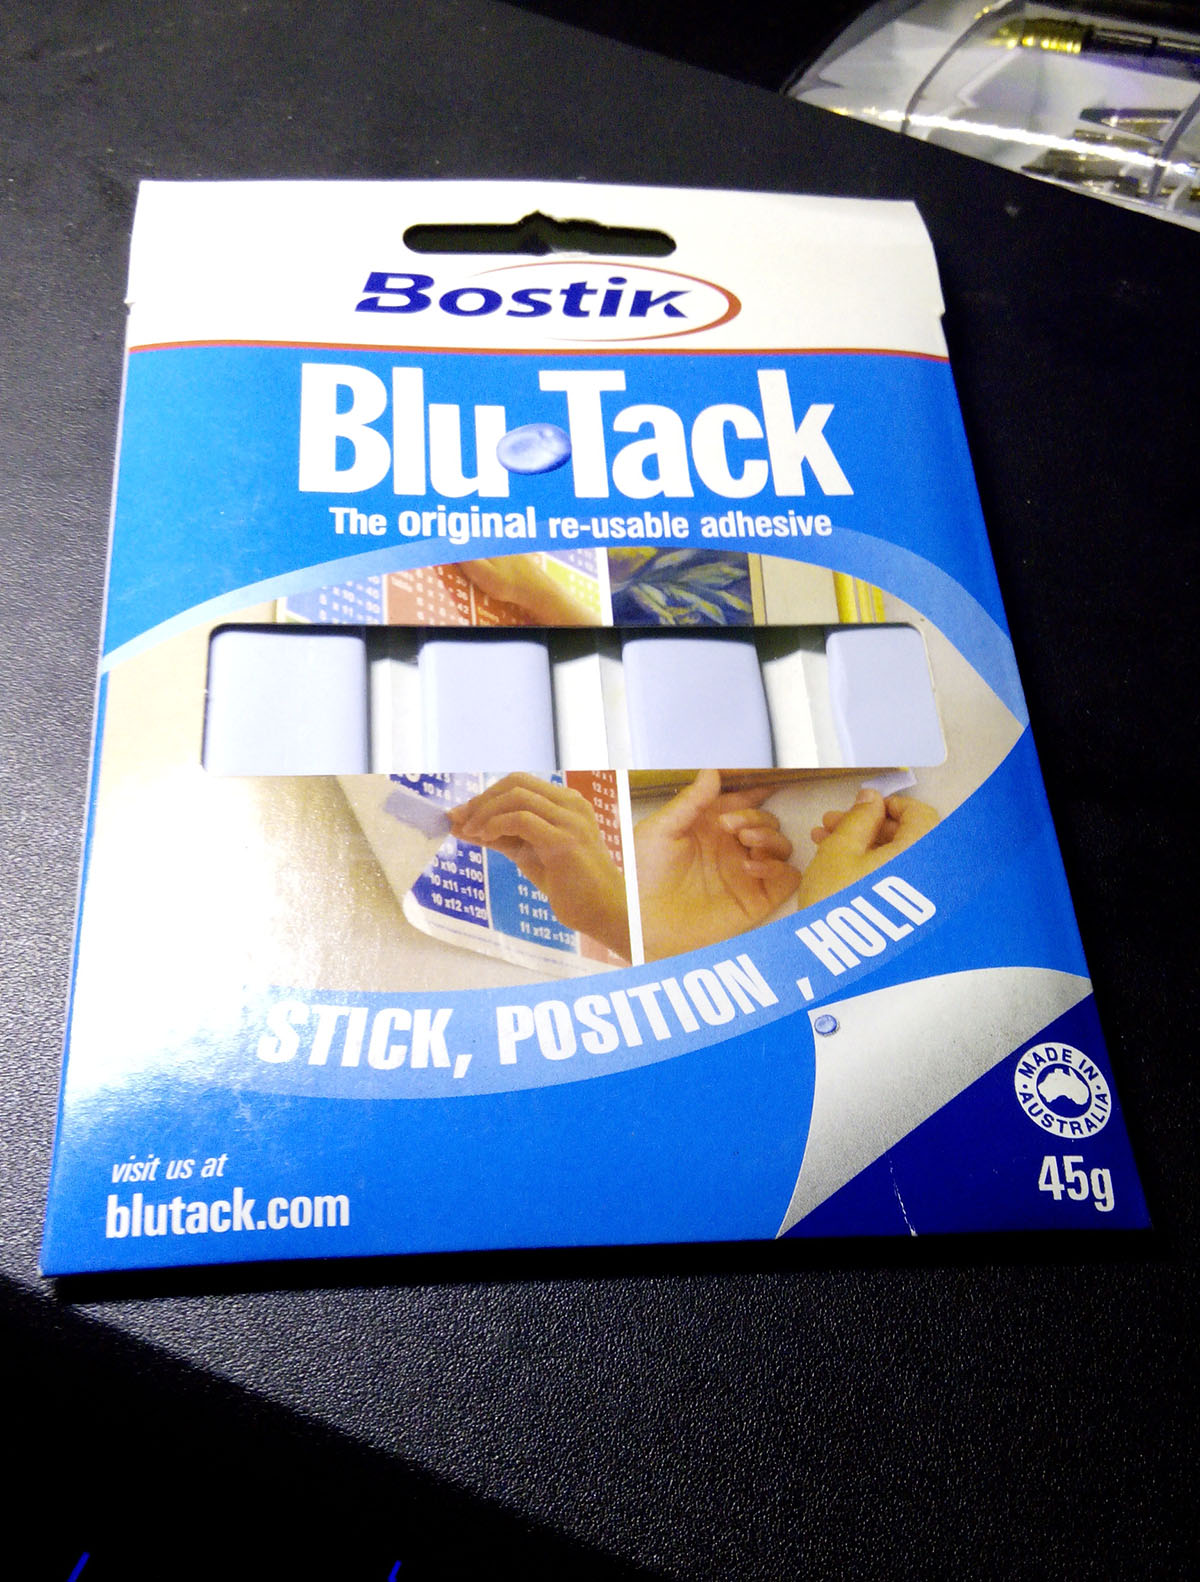 The usage of Blu-Tack